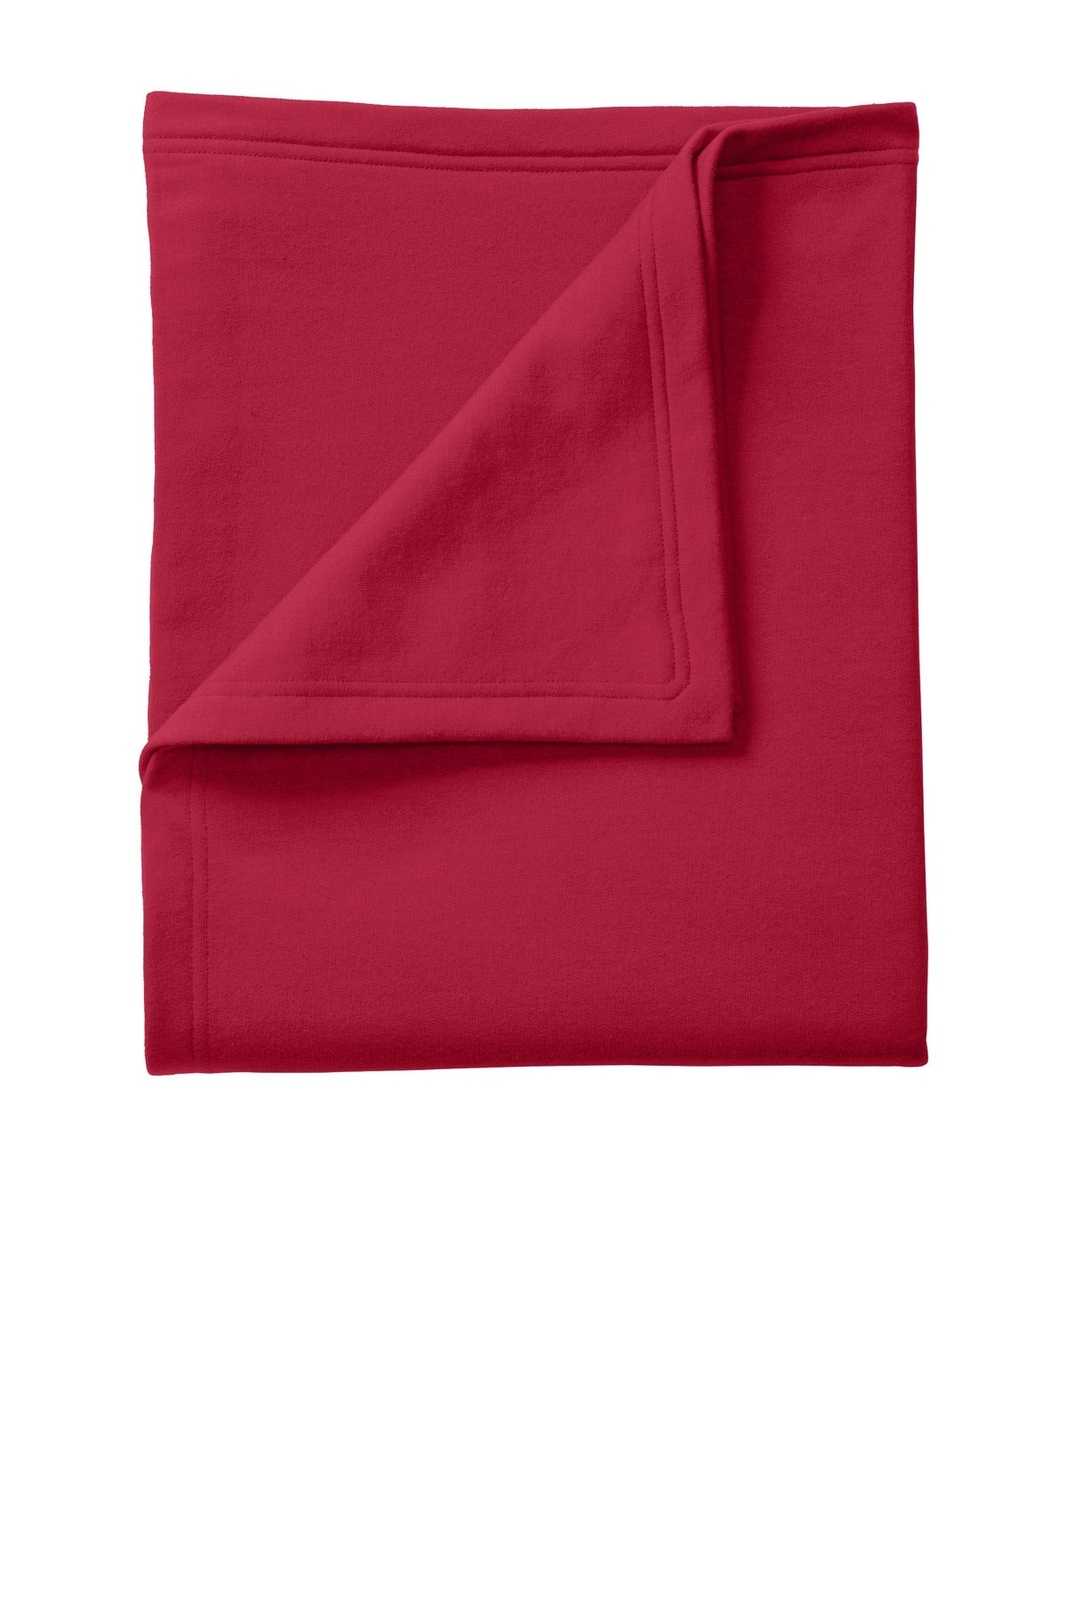 Port & Company BP78 Core Fleece Sweatshirt Blanket - Red - HIT a Double - 1